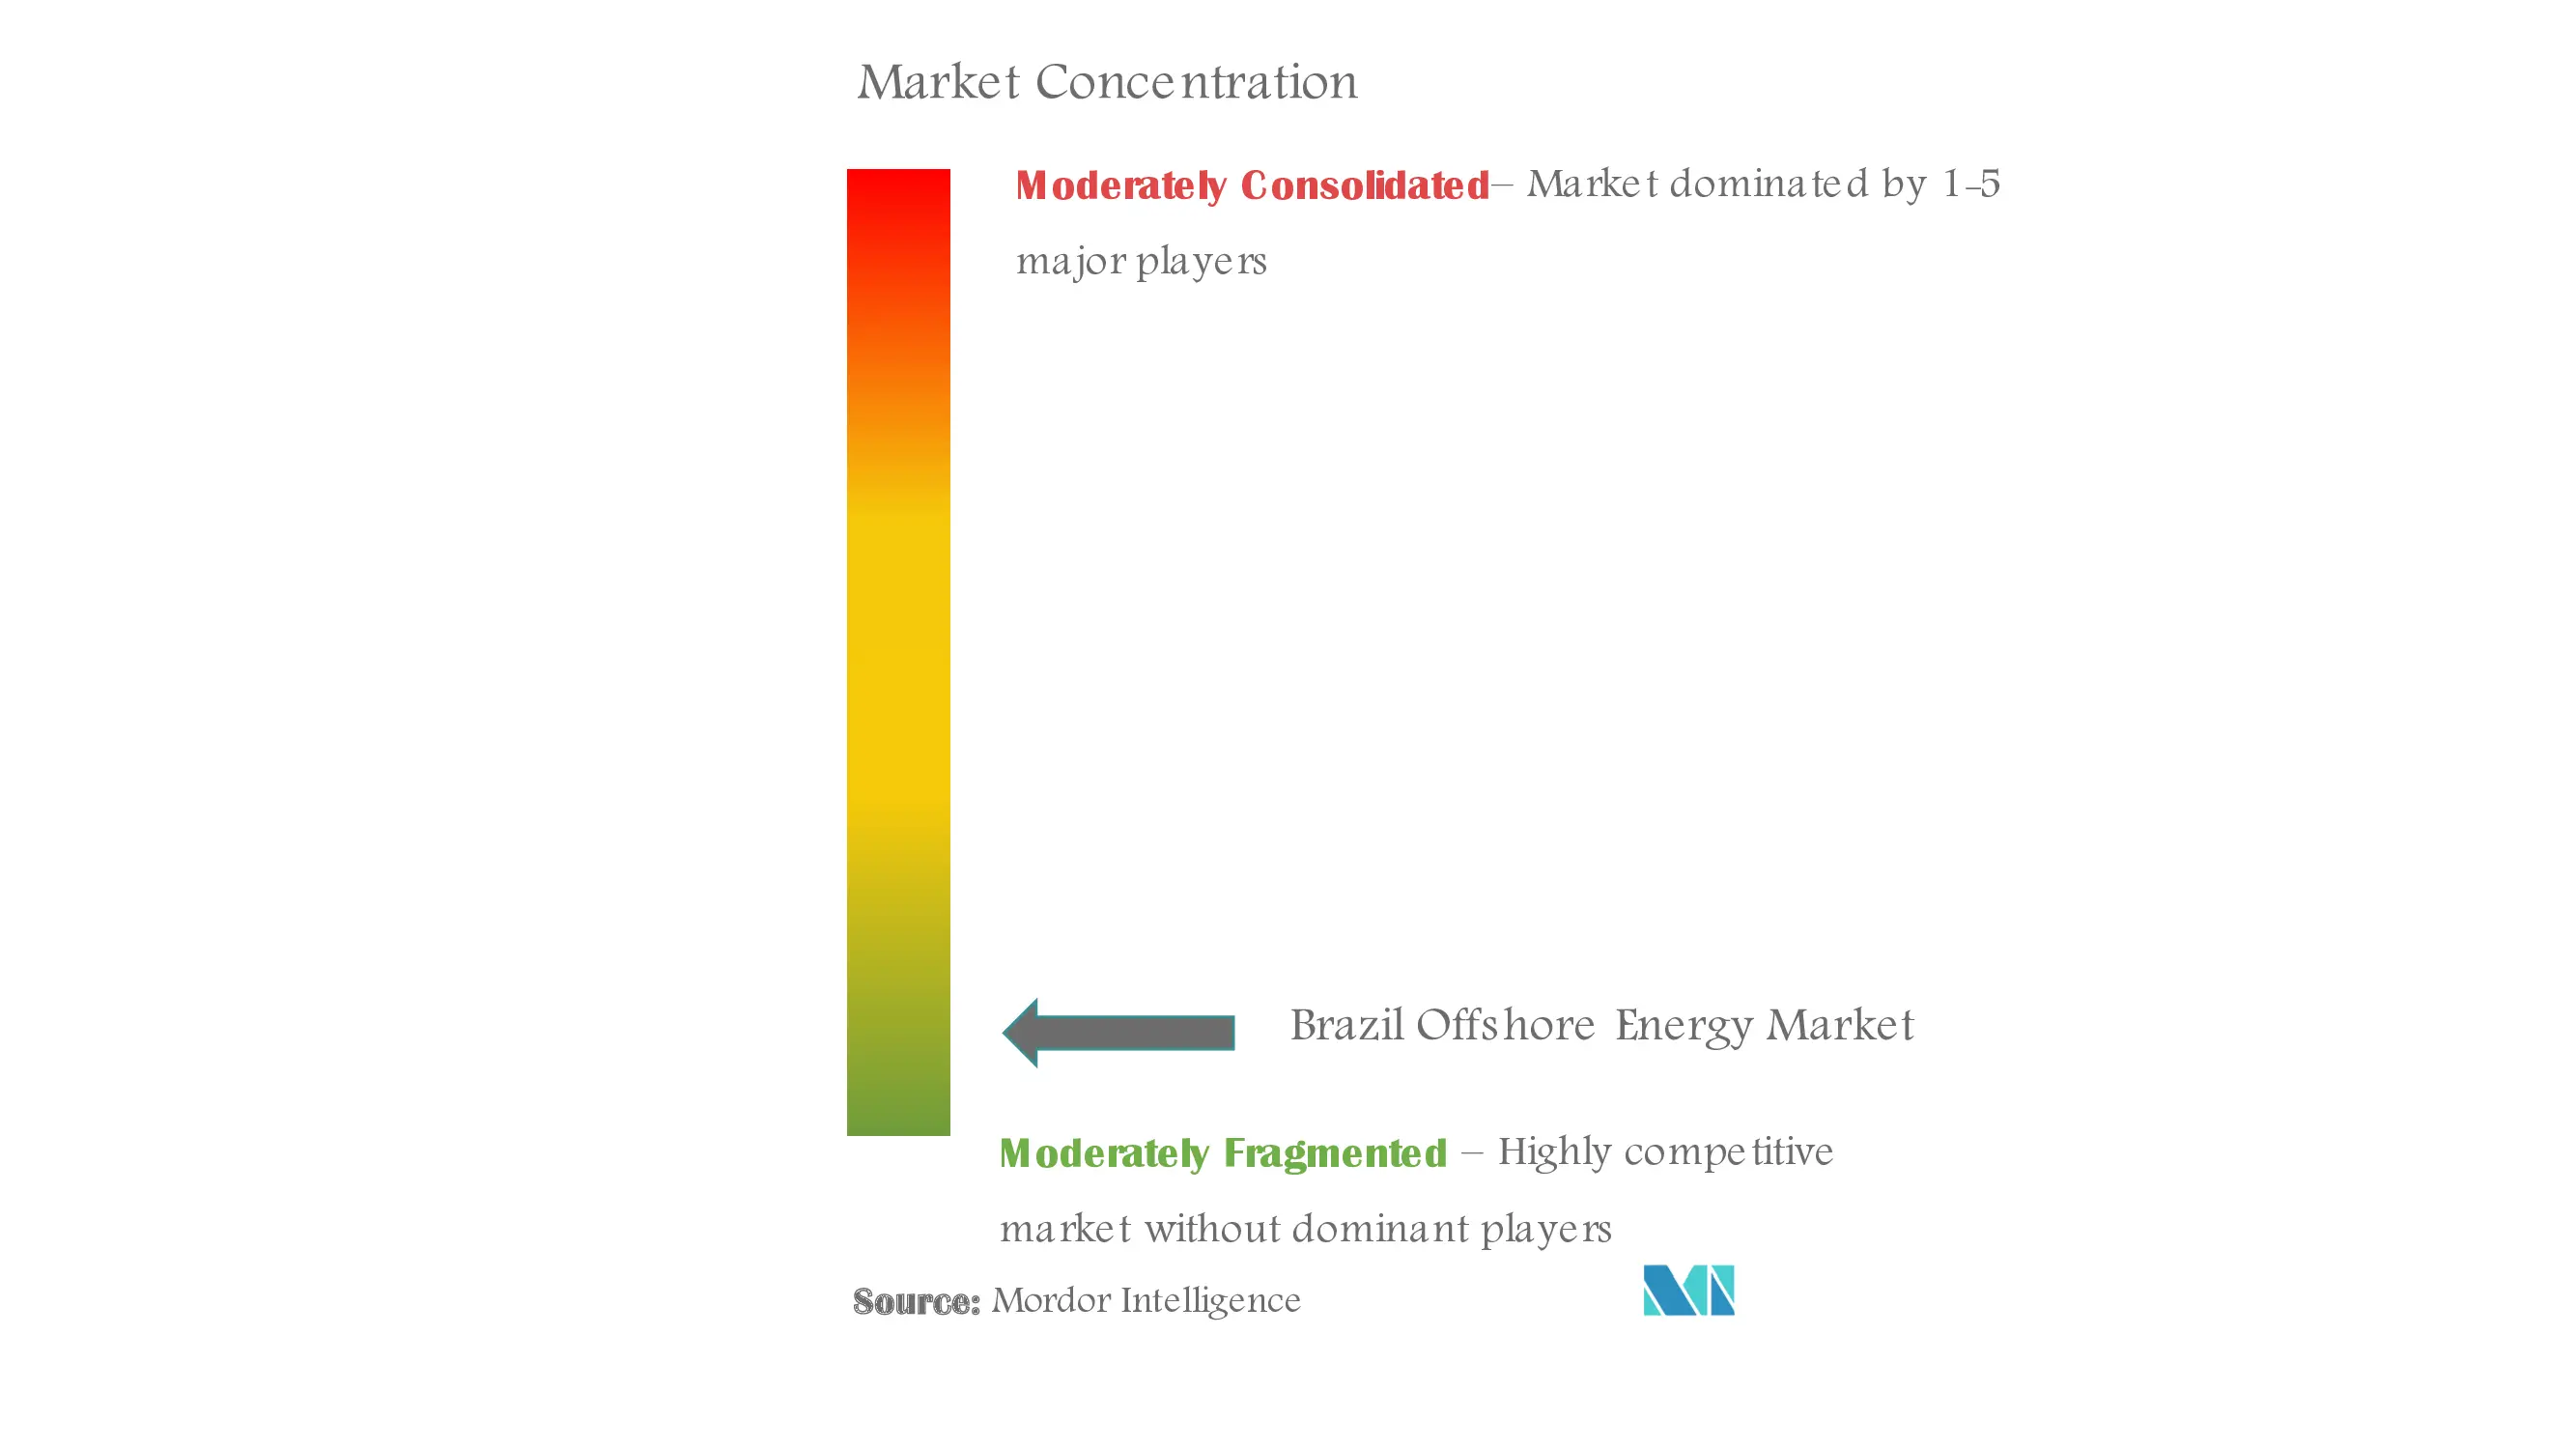 Brazil Offshore Energy Market Concentration